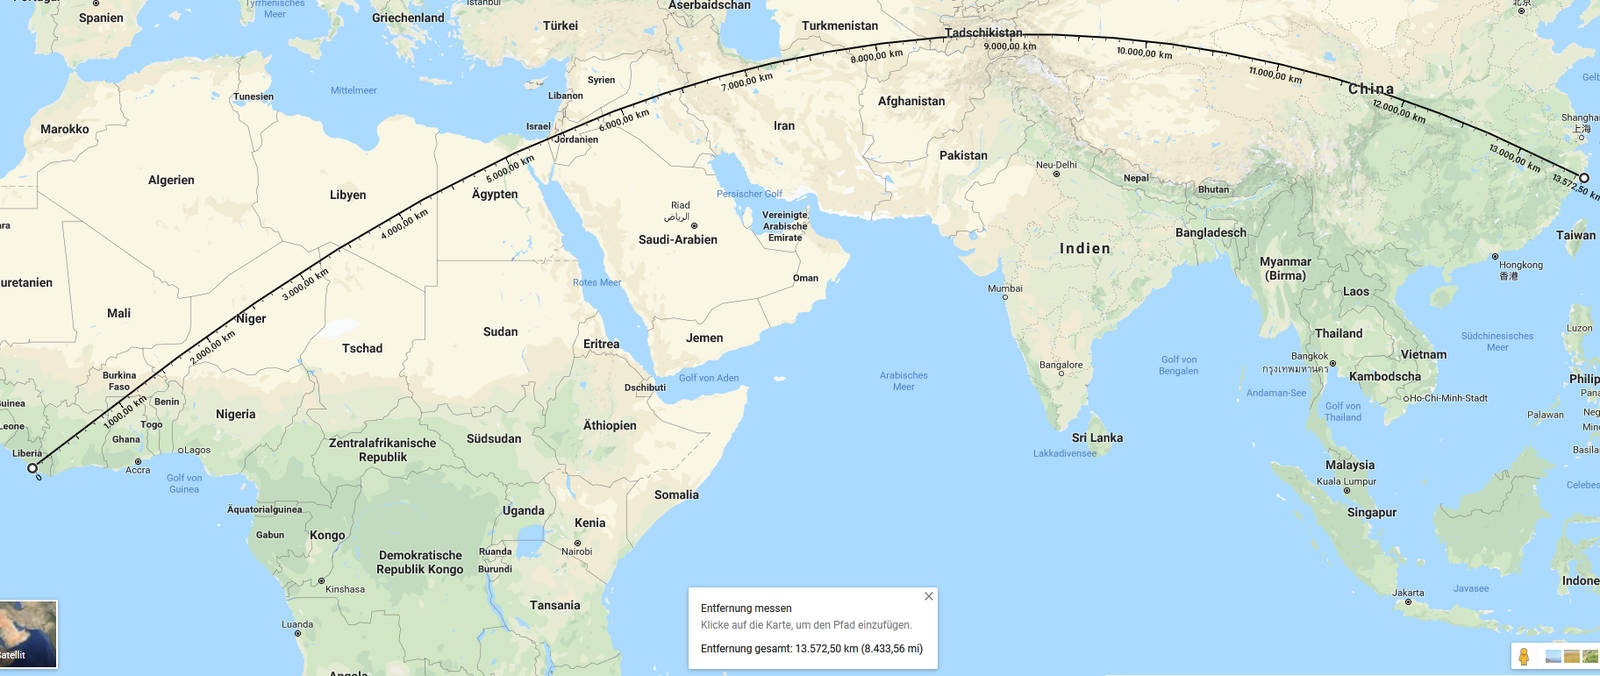 Longest direct land route - Travels, World map, Route, Reddit